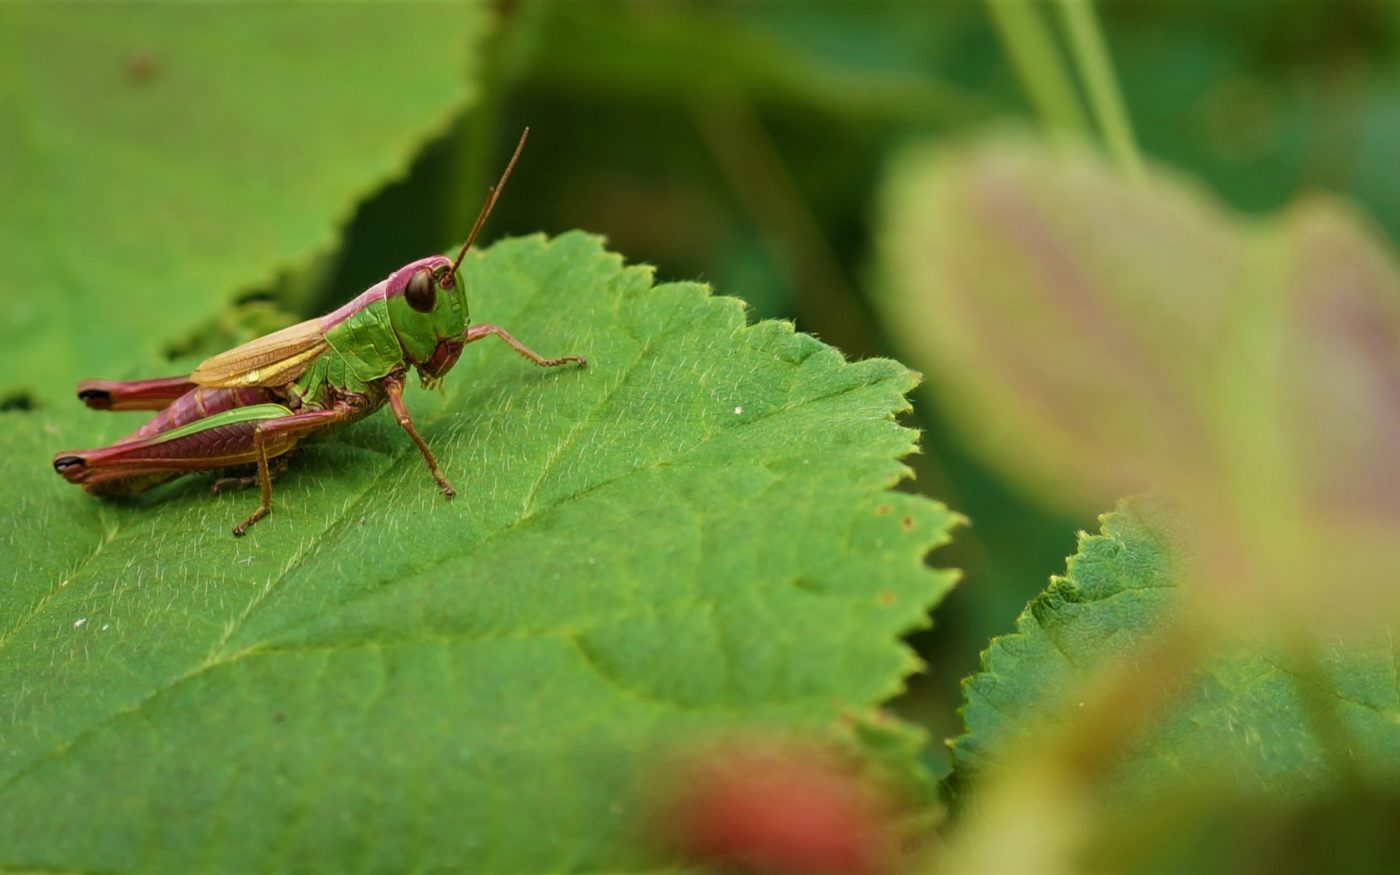 Meadow Grasshopper, Pseudochorthippus parallelus on a green leaf